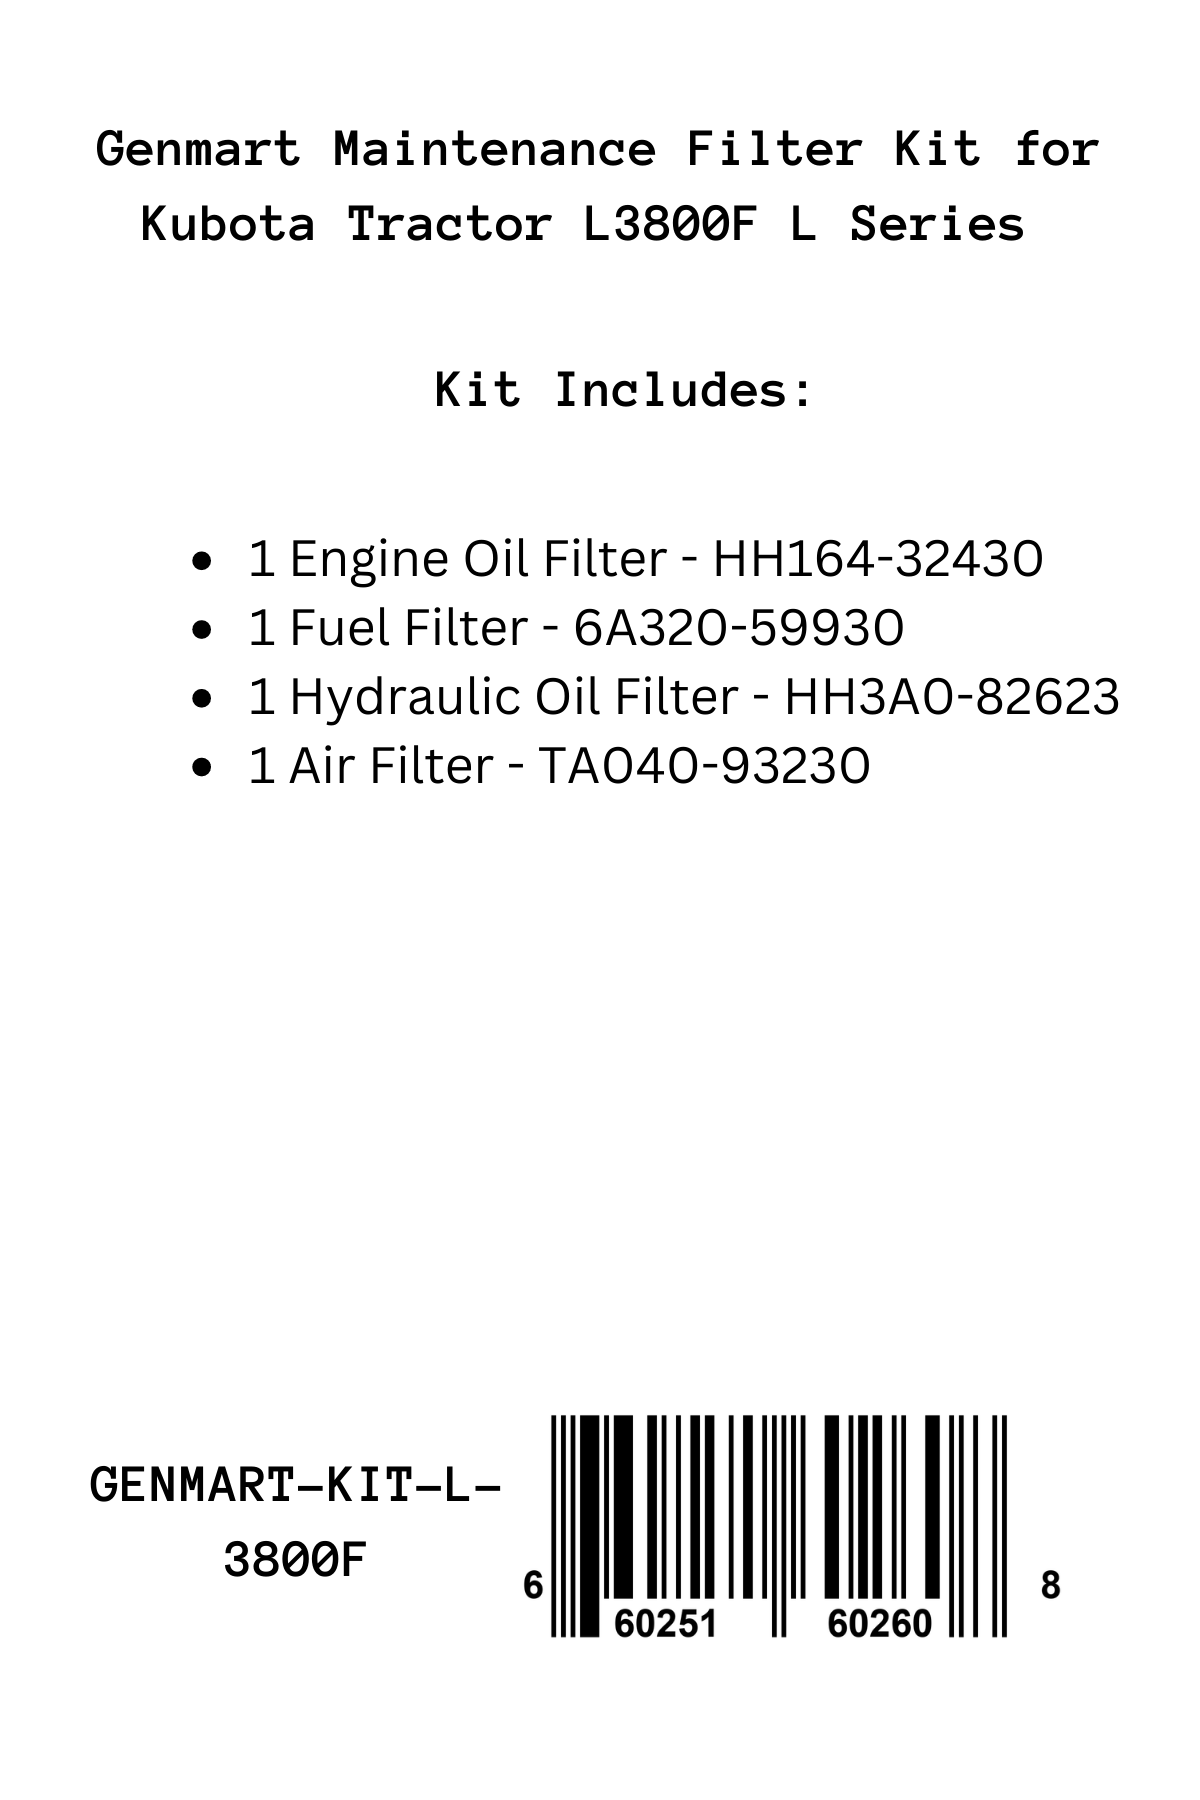 Genmart Maintenance Kit for Kubota Tractor L3800F L Series